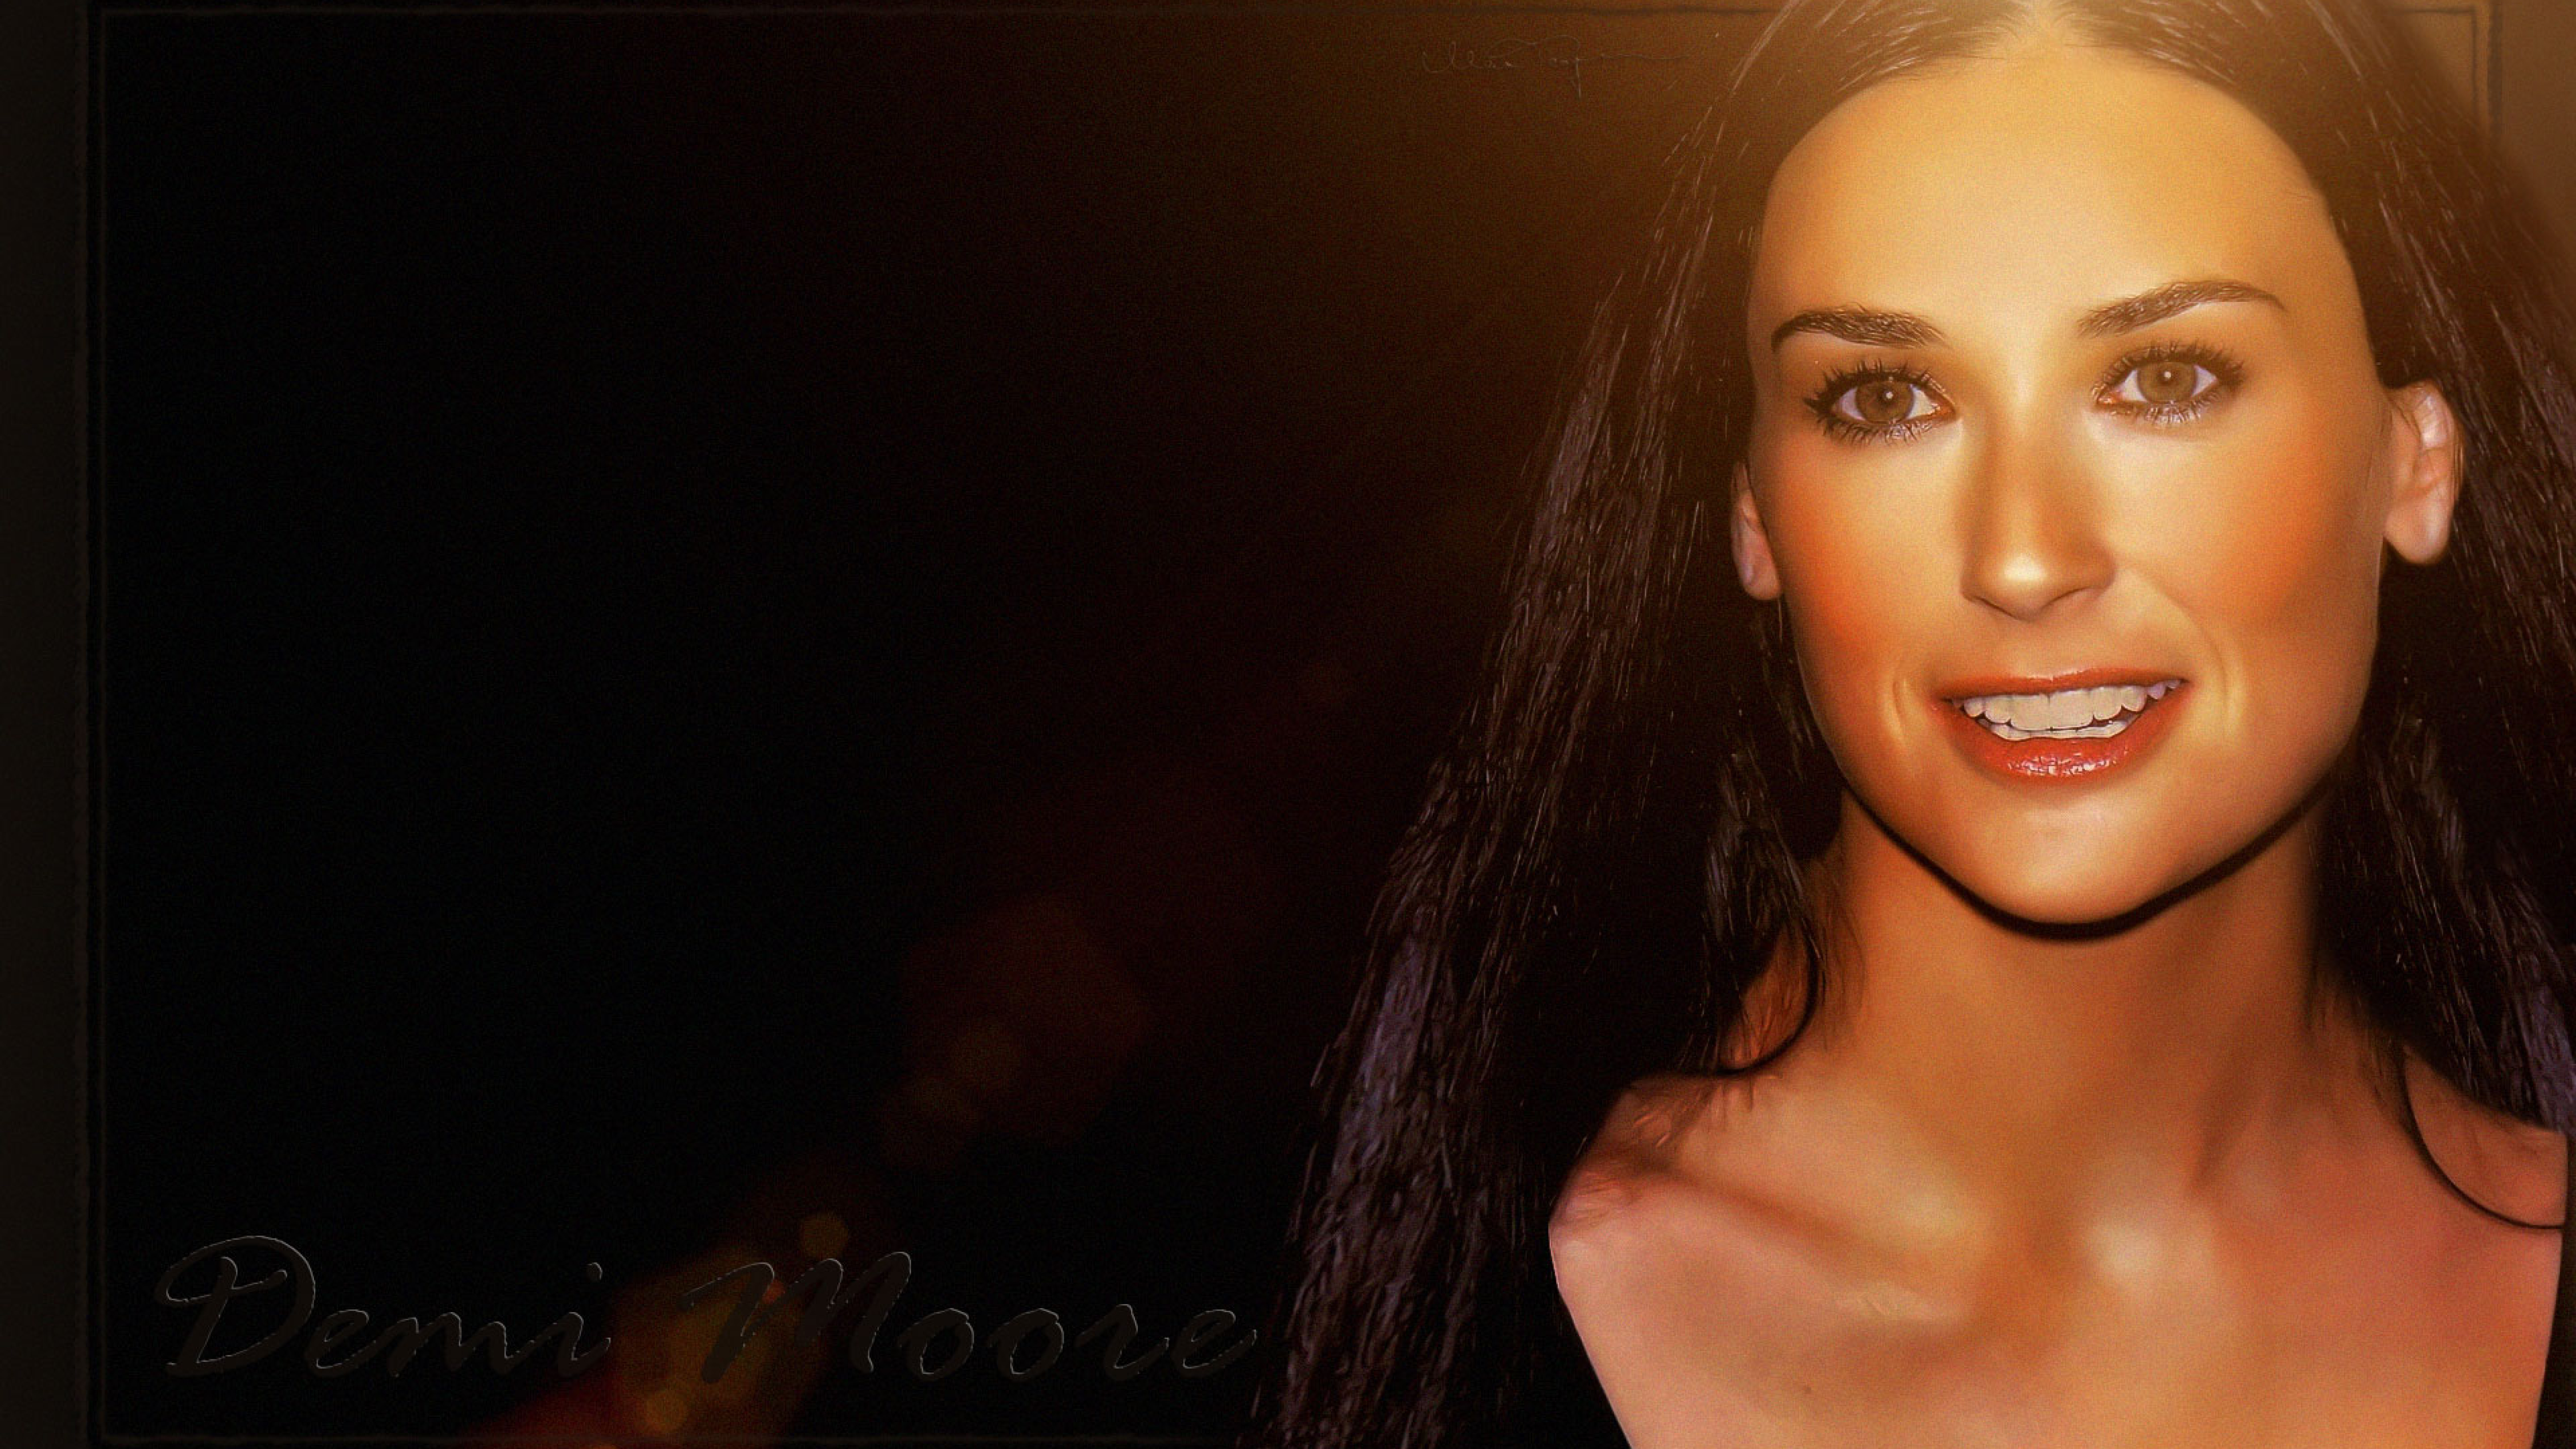  Demi Moore Smile  Photoshoot Full HD Wallpaper